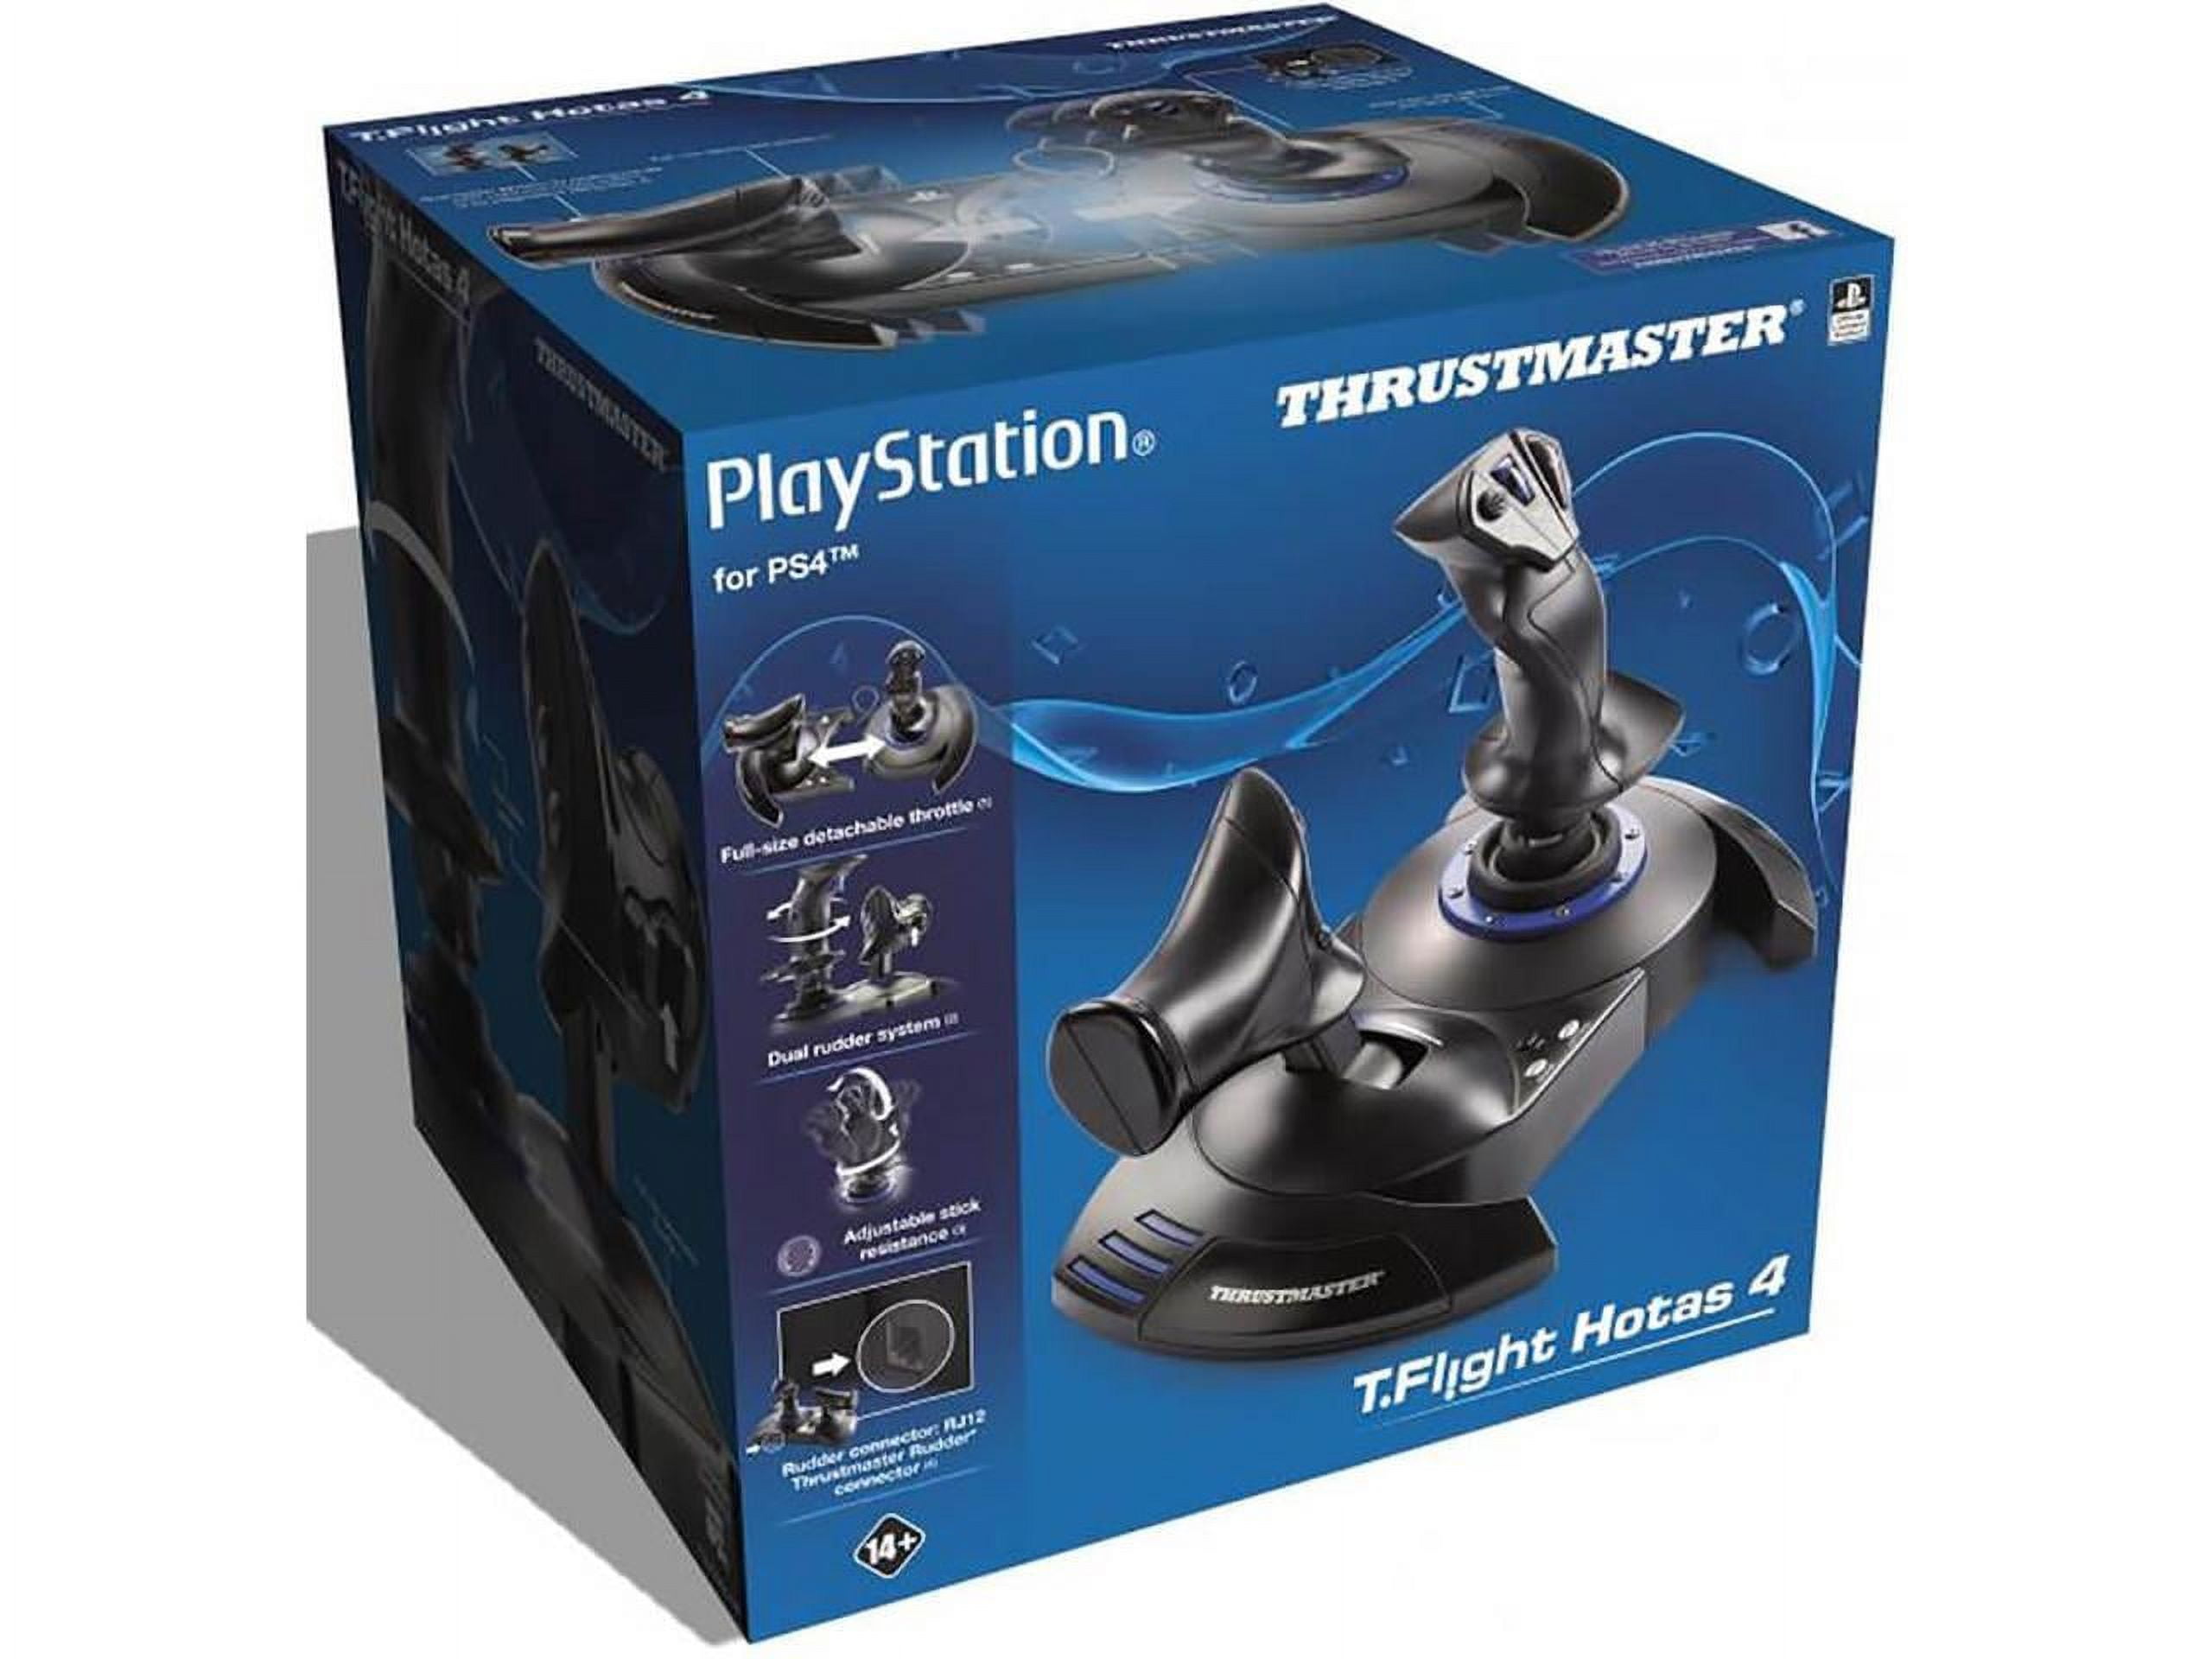 Thrustmaster TMSTR T-Flight Hotas 4 Joystick for PS5, PS4 & PC - NEW  663296420572